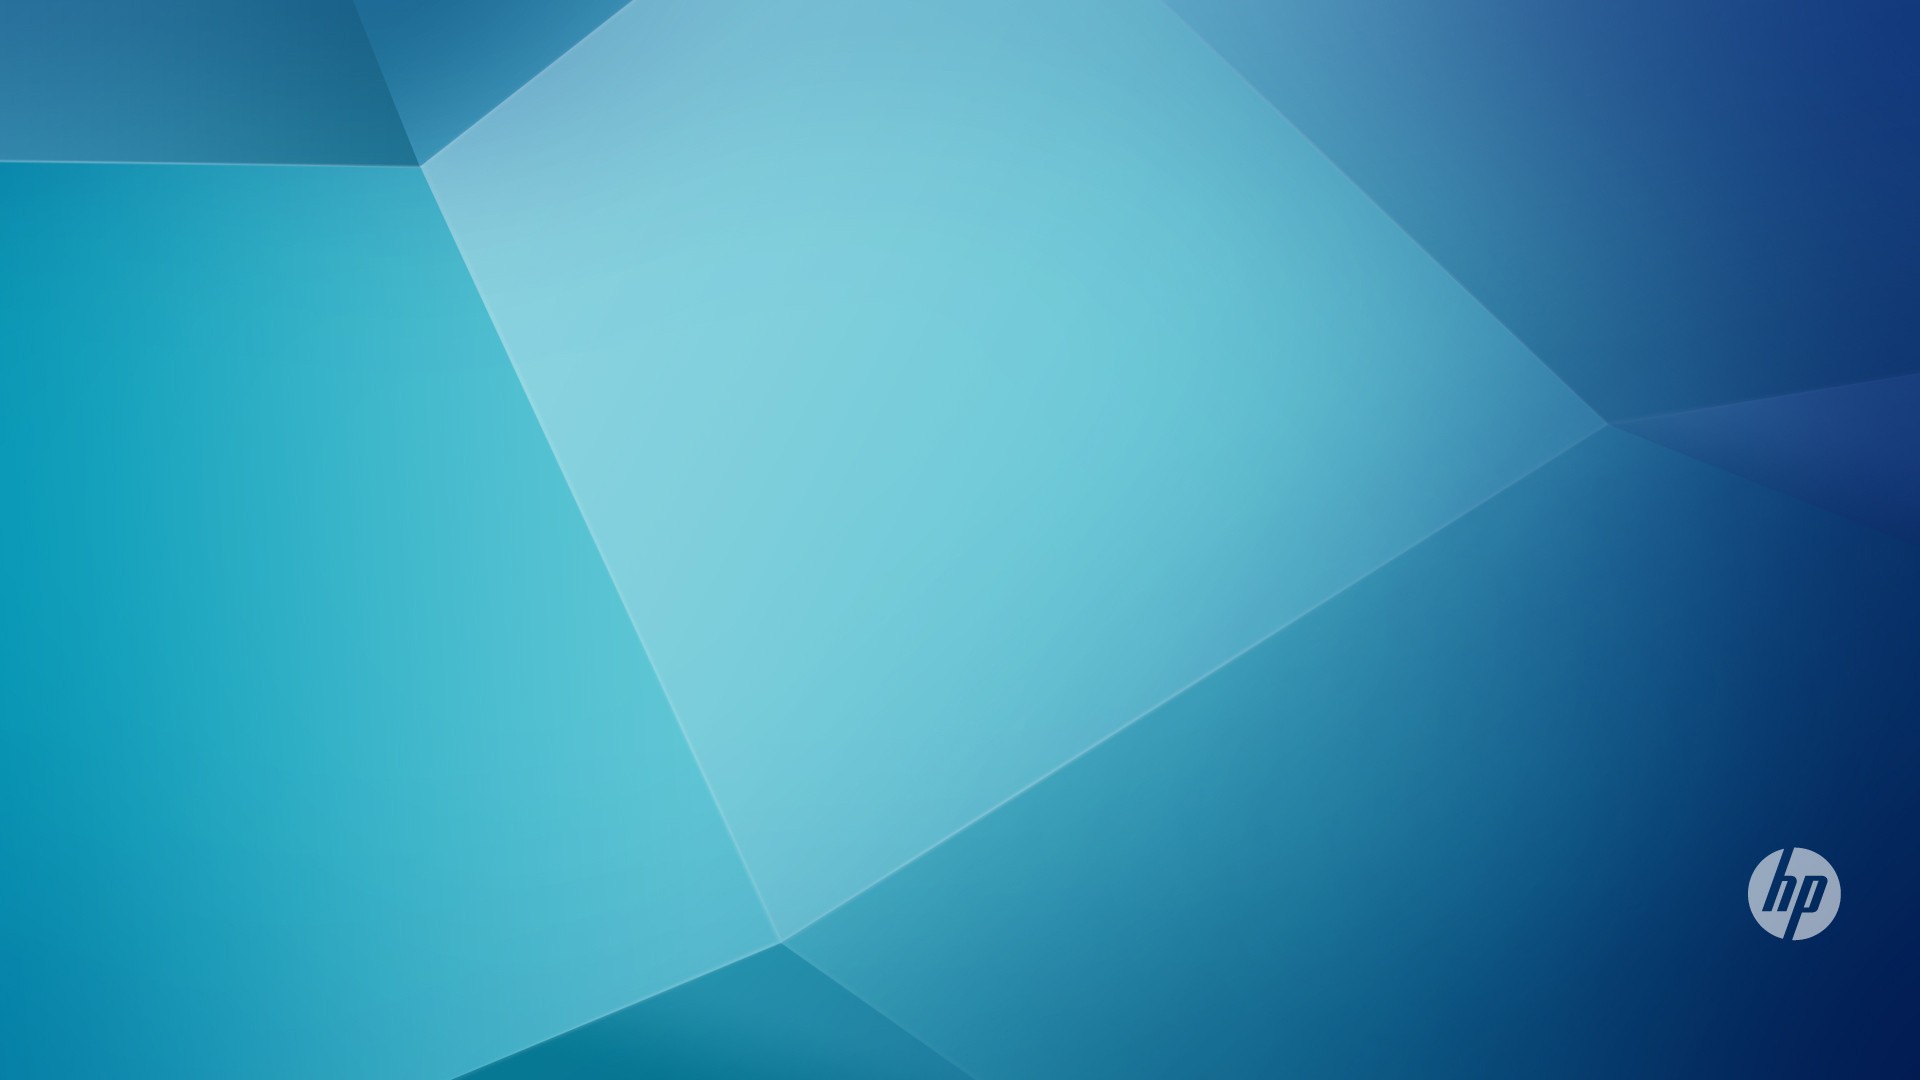 Hewlett Packard Logo Blue Background Cyan Turquoise Blue 1920x1080